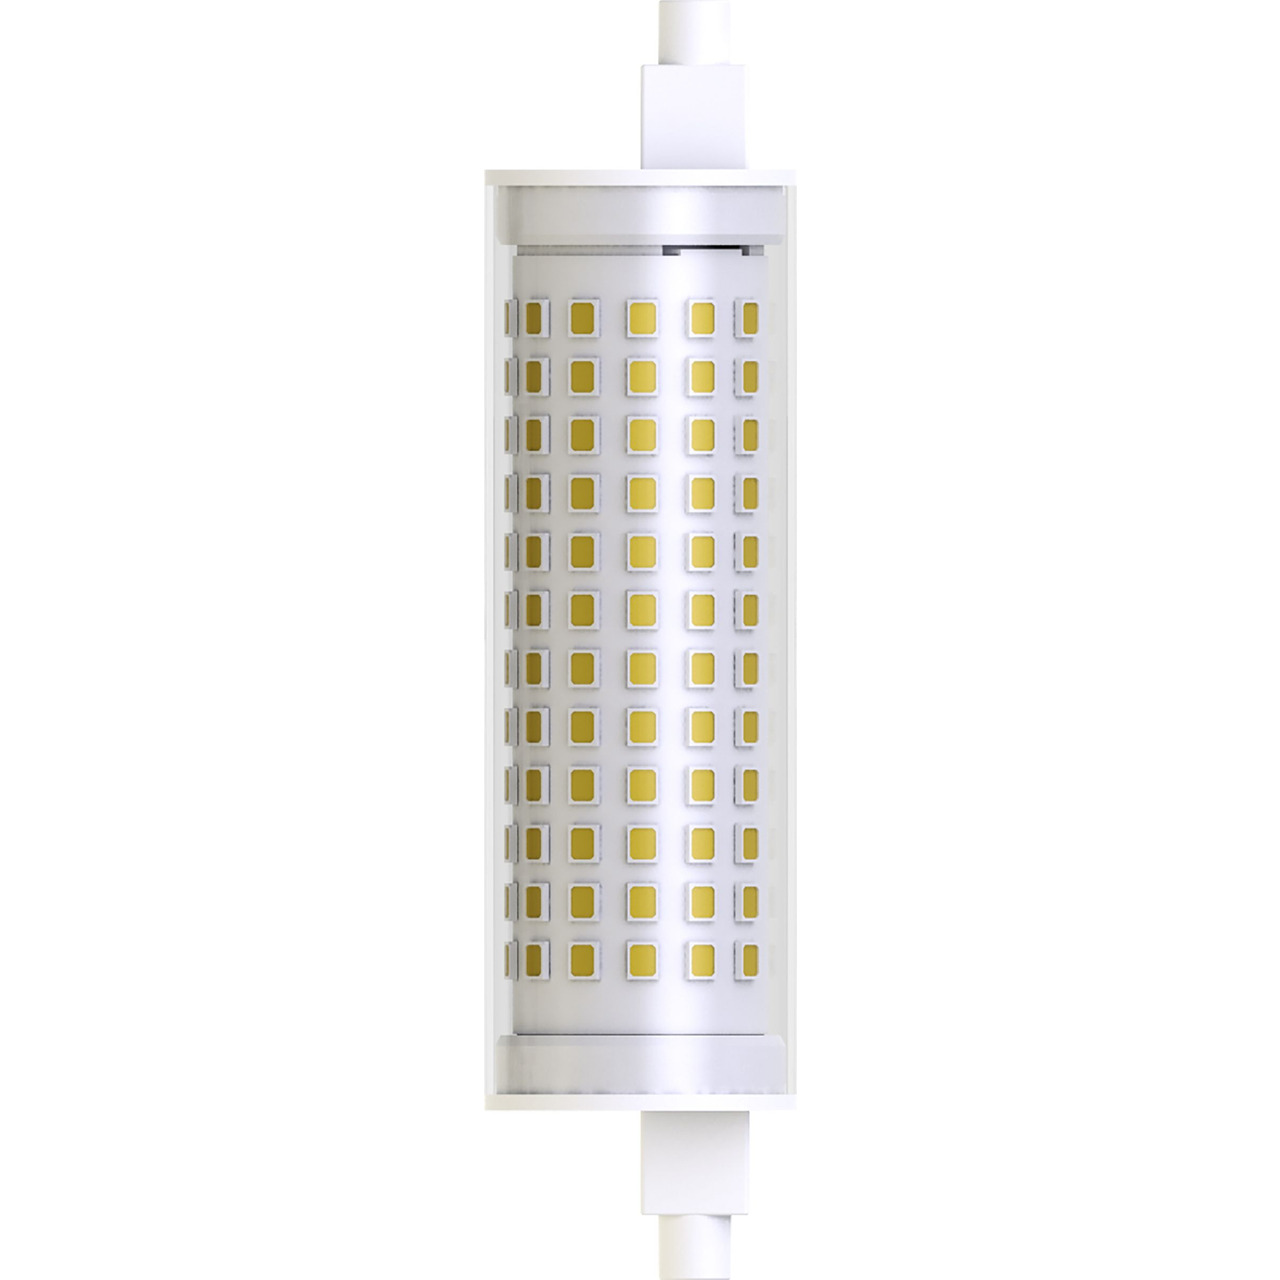 Blulaxa 19-W-LED-Lampe- R7s- 2452 lm- warmweiss- 2700 K- 129 lm-W- versetzter Sockel- - 28 mm unter Beleuchtung